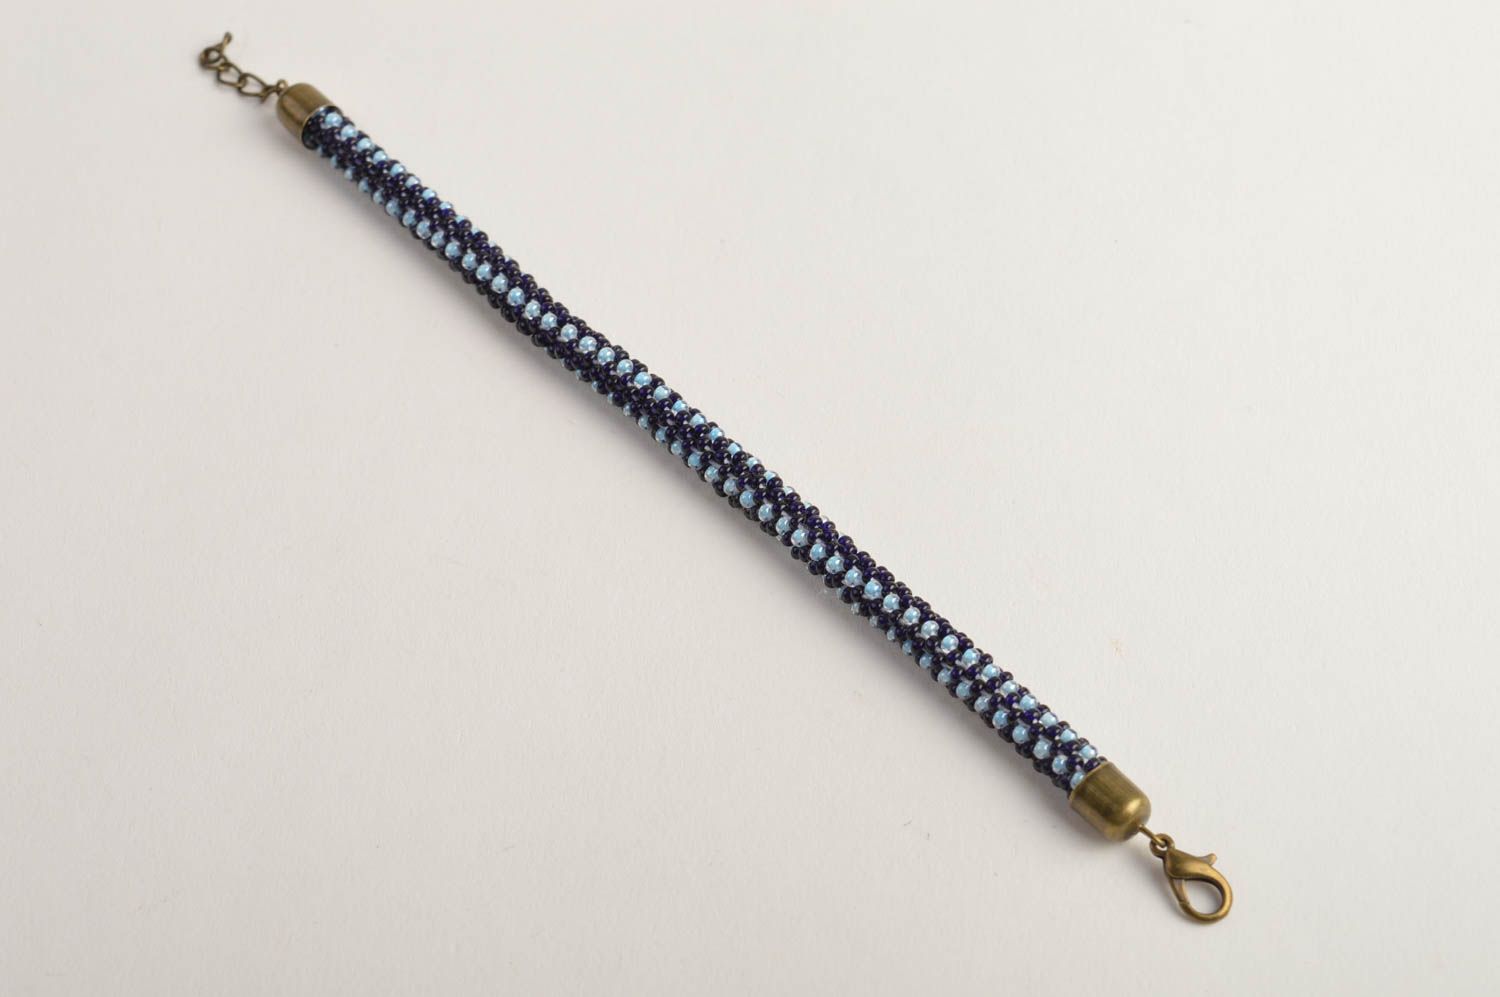 Black and blue beads cord adjustable bracelet for girls photo 2